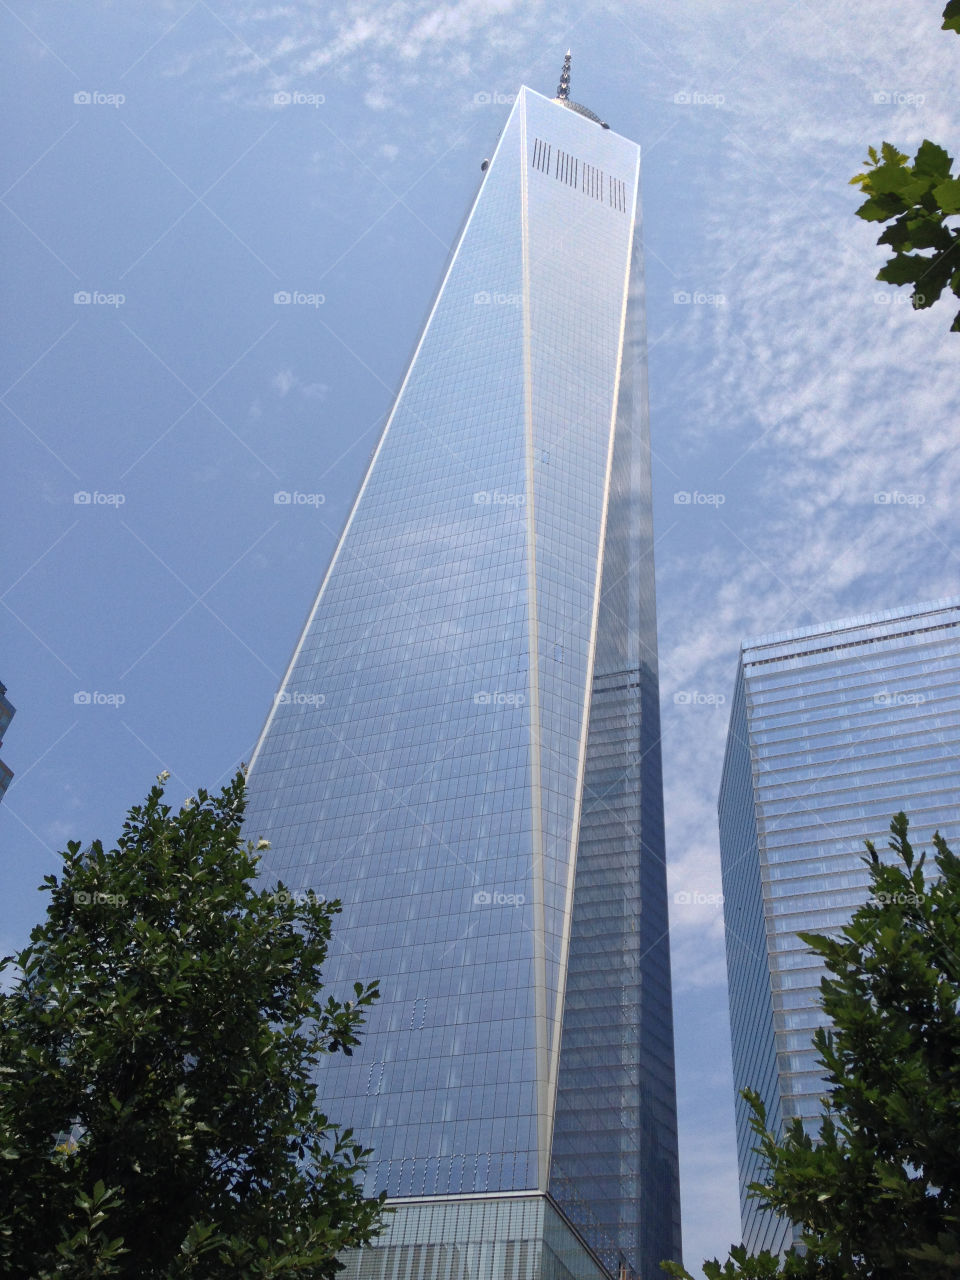 Freedom Tower
New York, New York